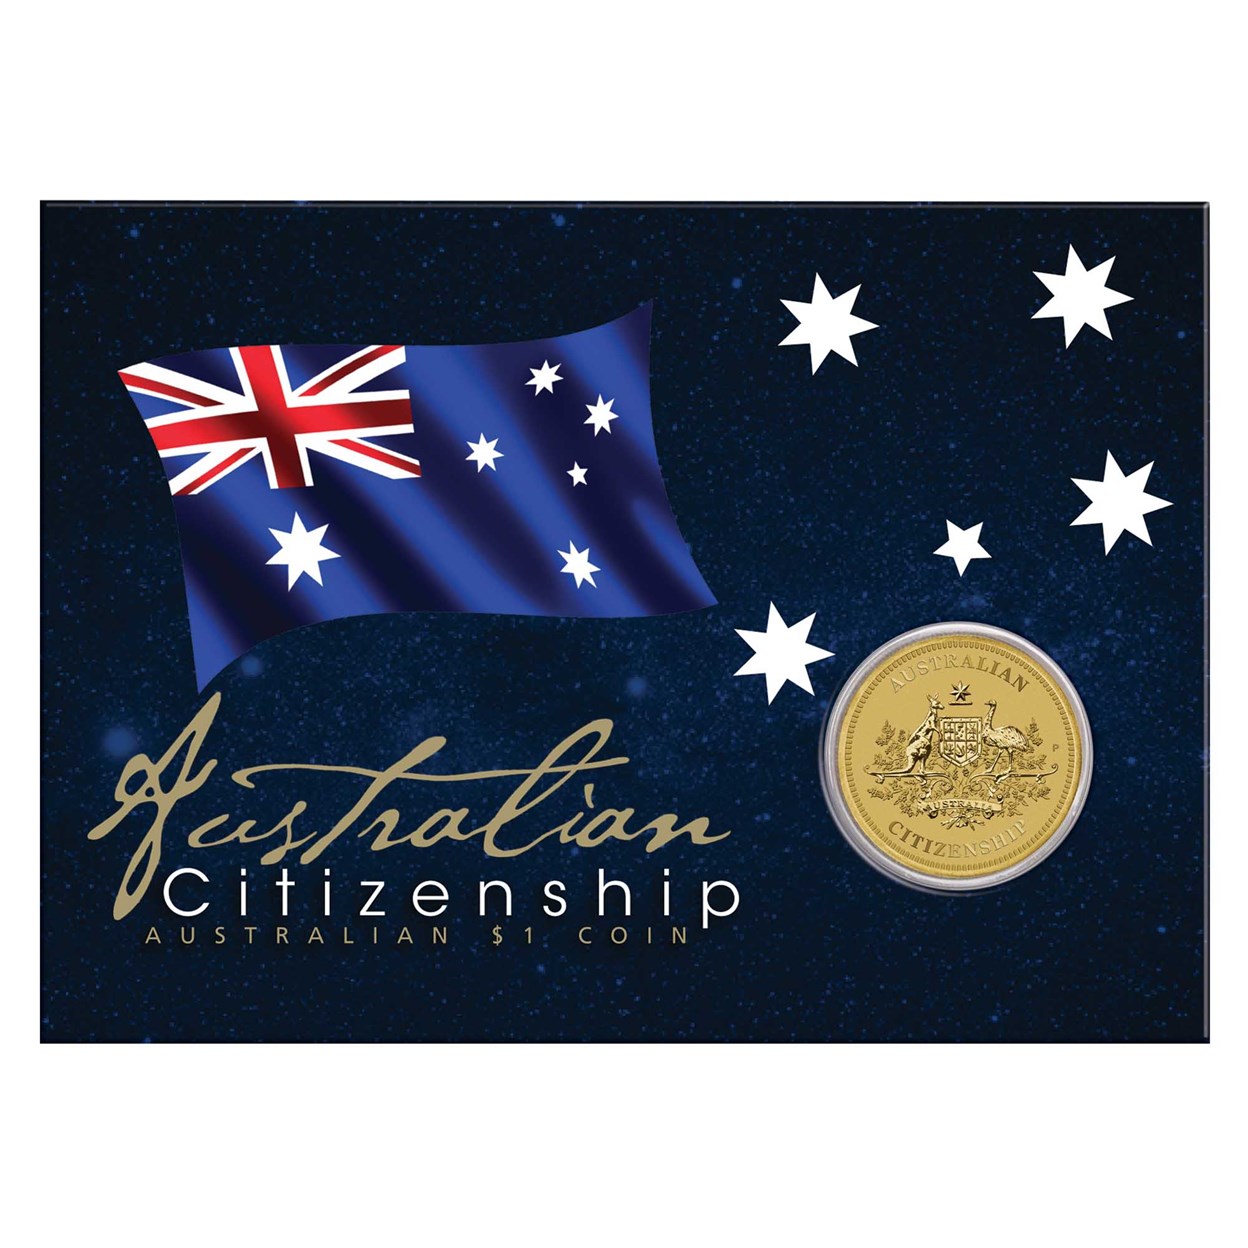 03 australian citizenship 2019 $1 coin InCard